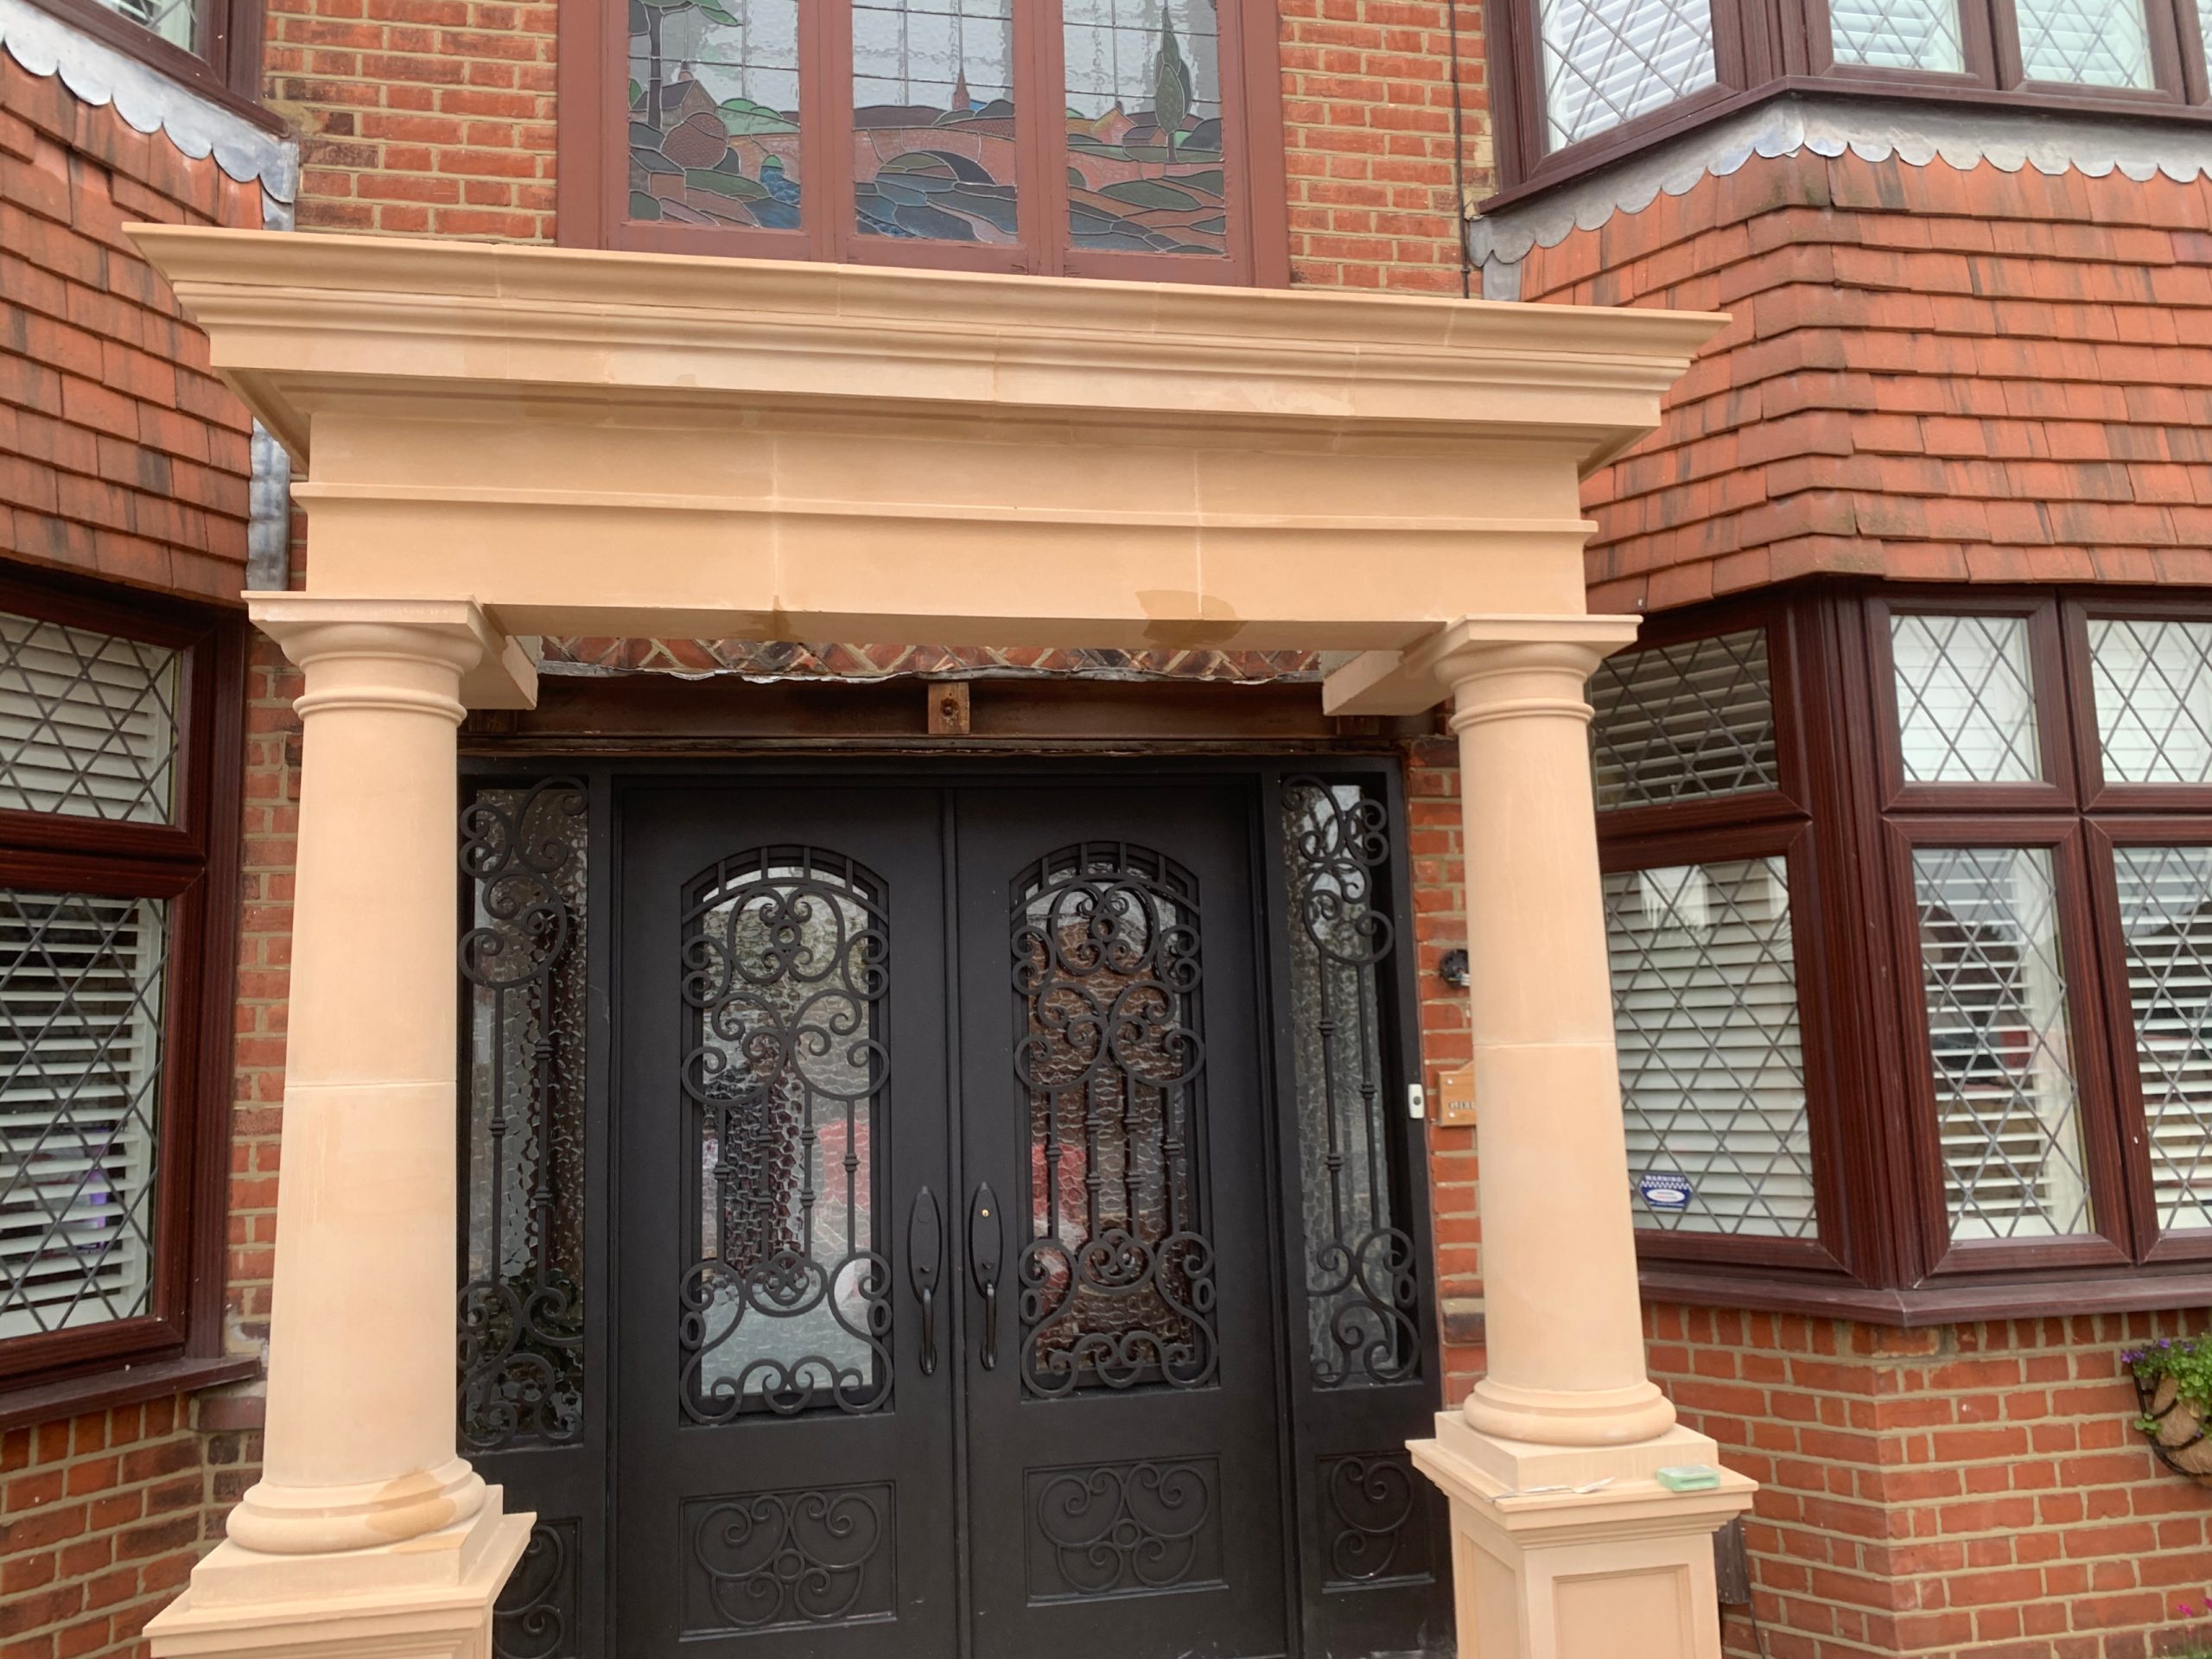 Make A Grand Entrance with Bespoke Stone Portico Designs Porches - Malling Masonry